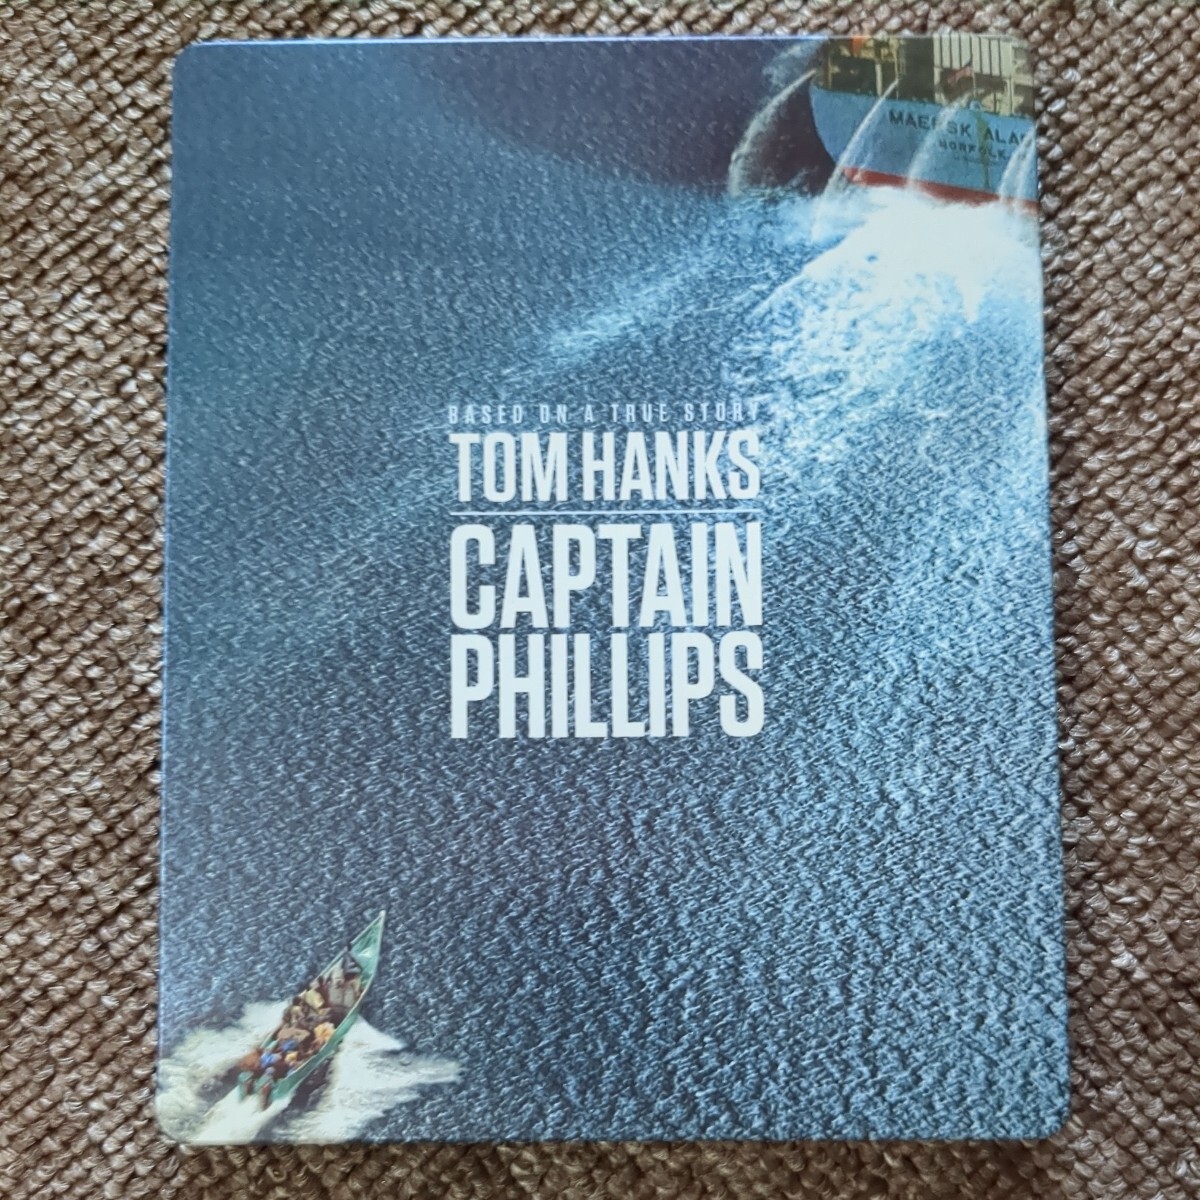  paul (pole) green glass PAUL GREENGRASS Captain Philips steel book Blue-ray Blu-ray